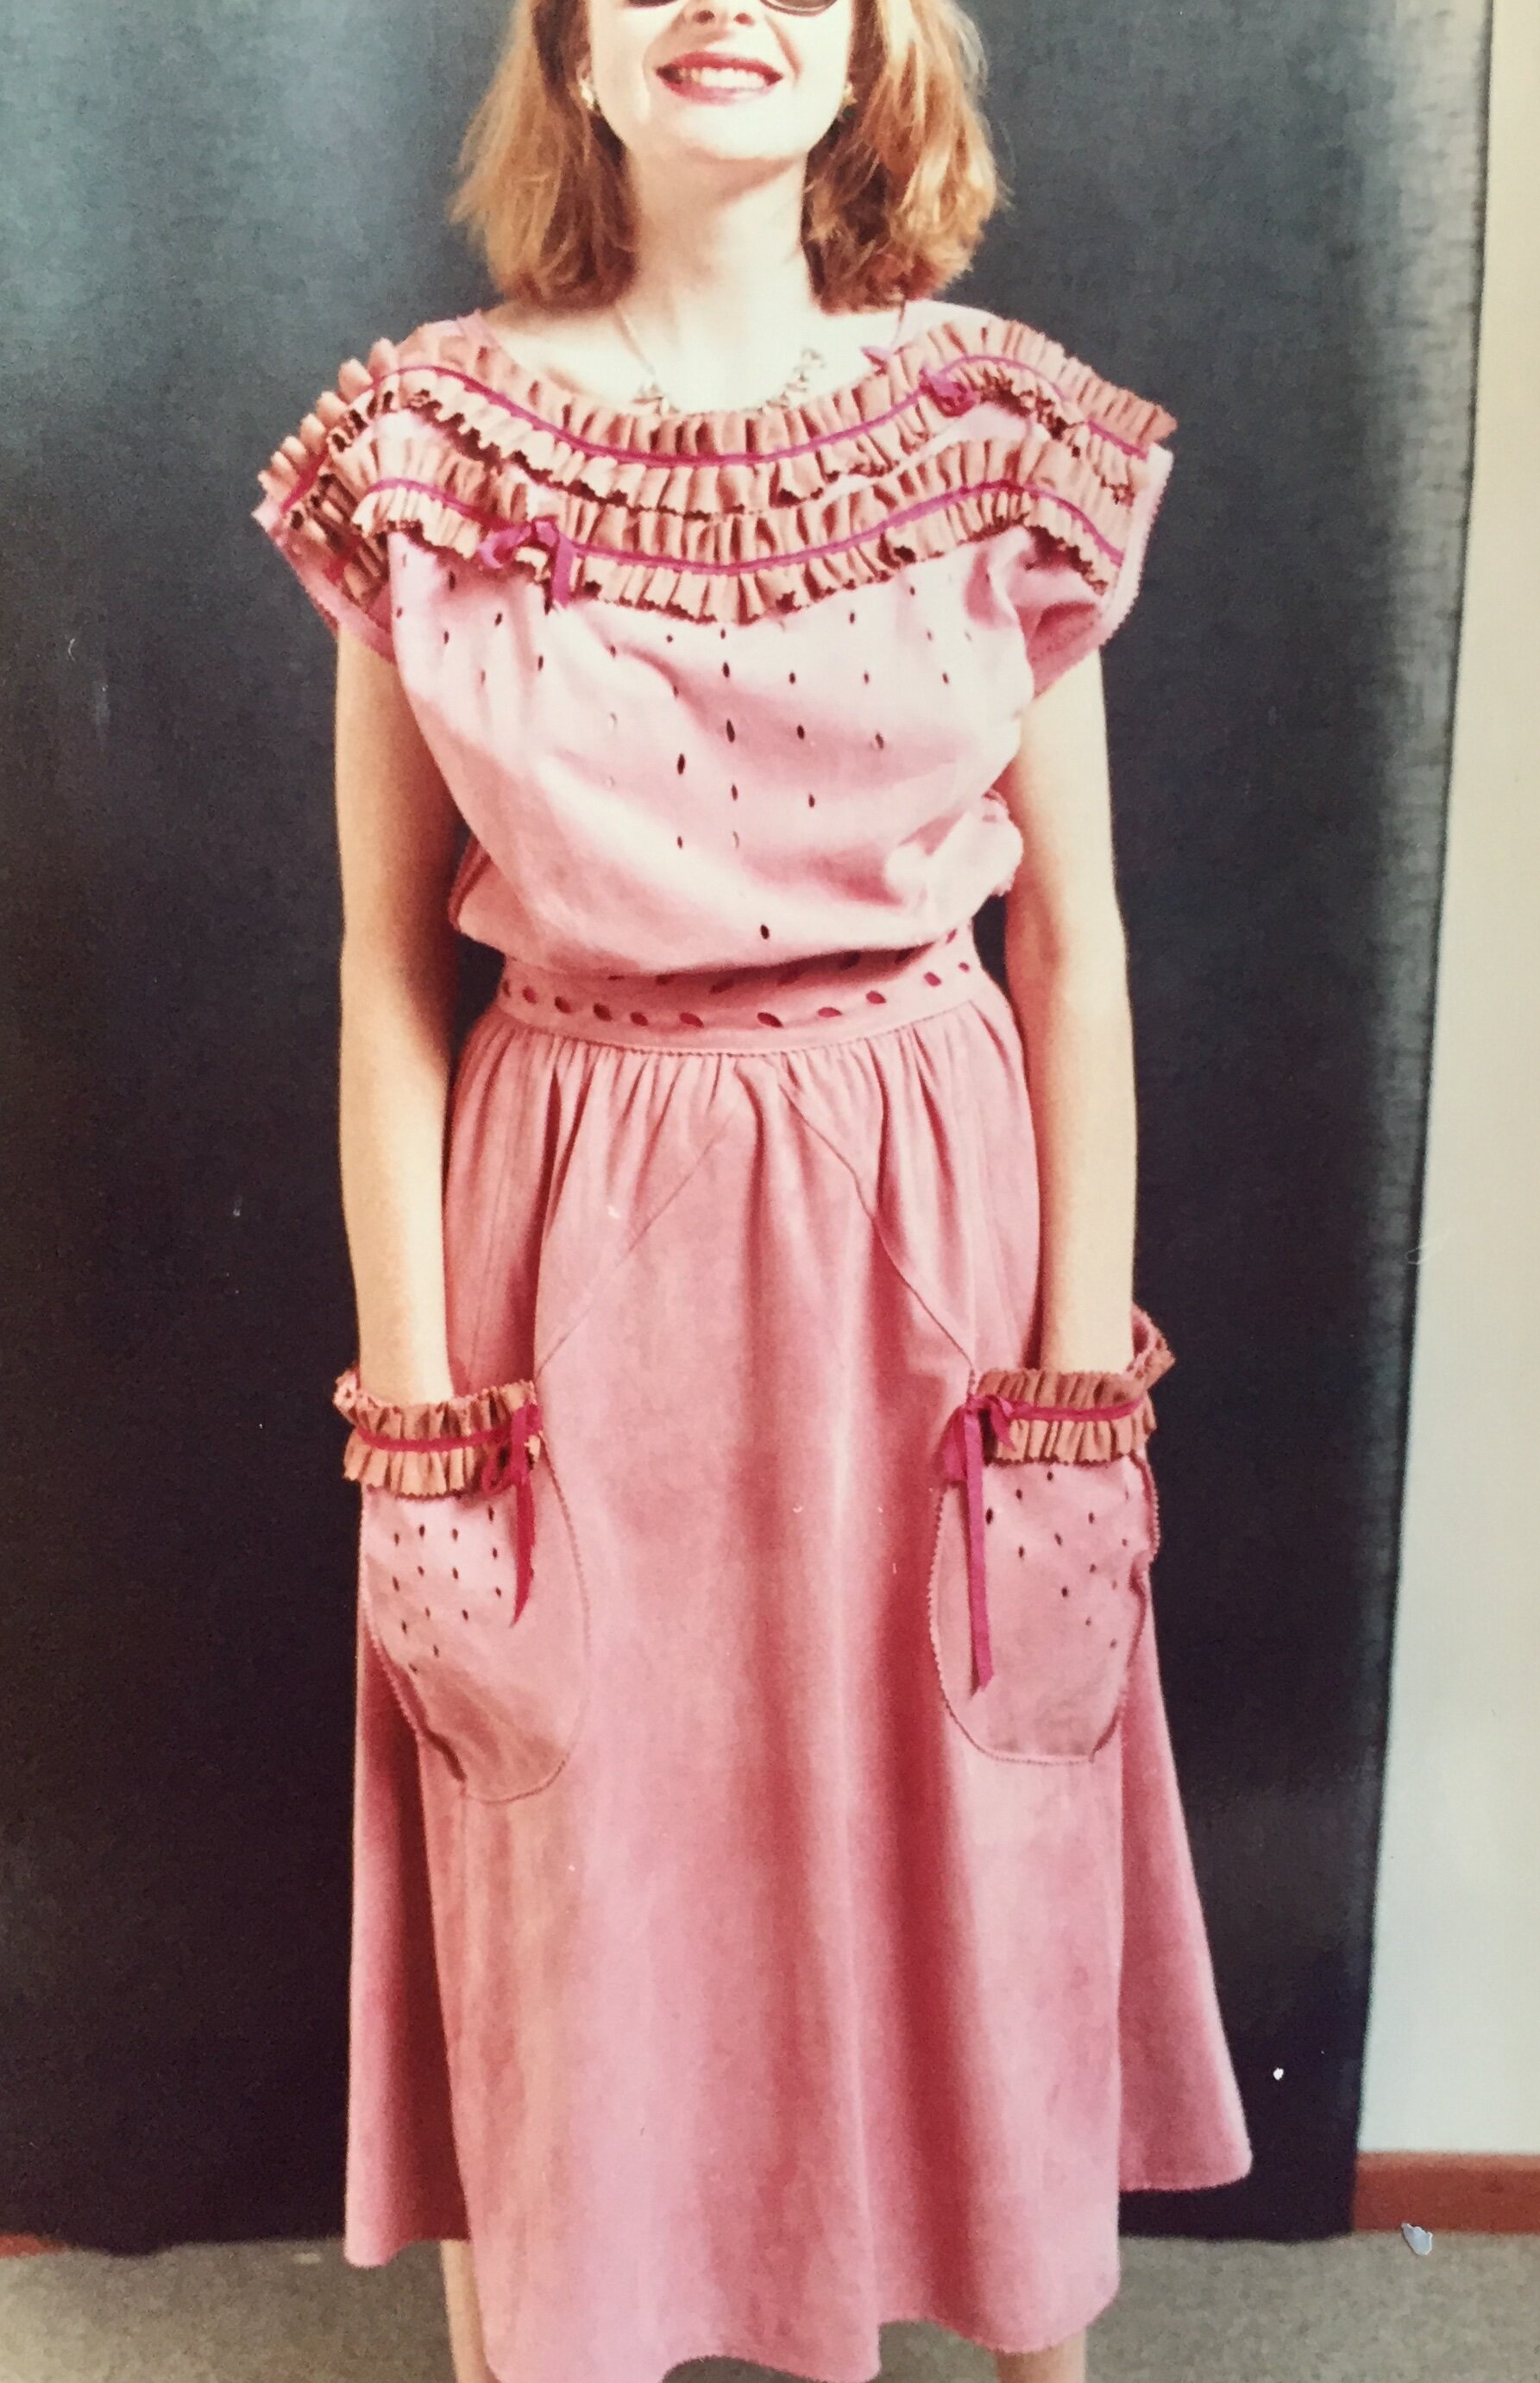 waisted pink frilly dress.jpg